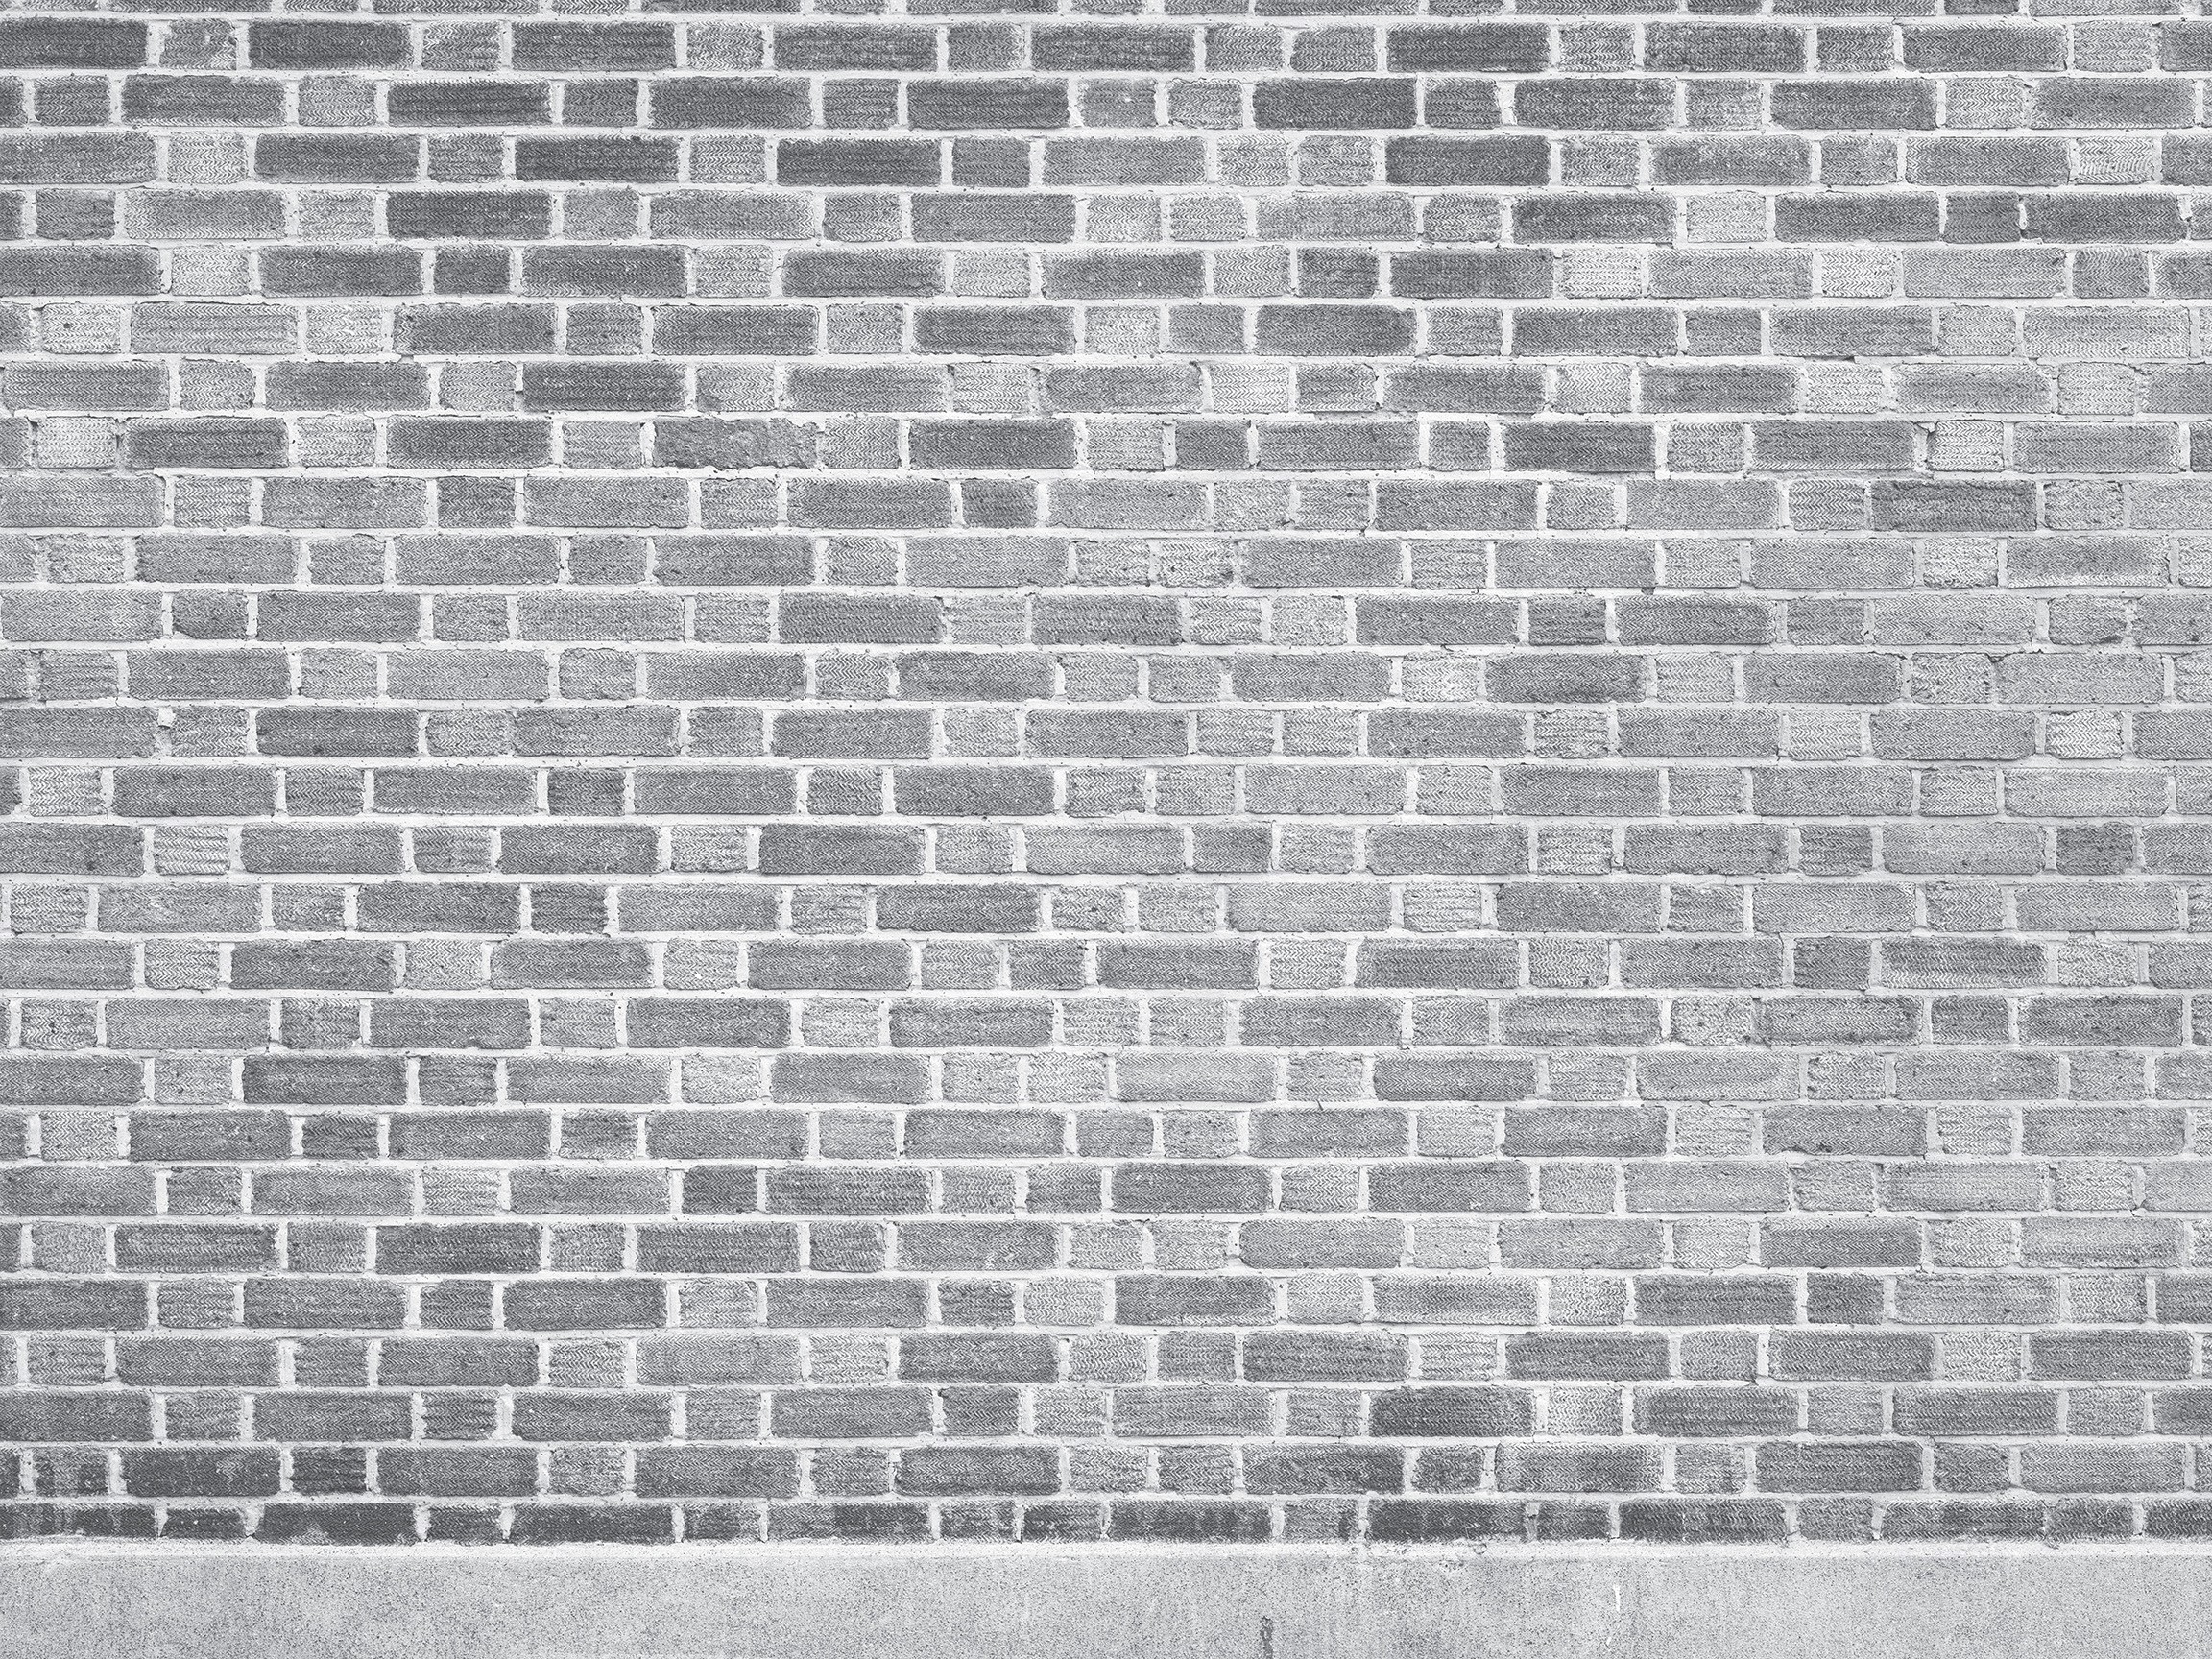 white brick wallpaper,wall,brickwork,brick,line,pattern